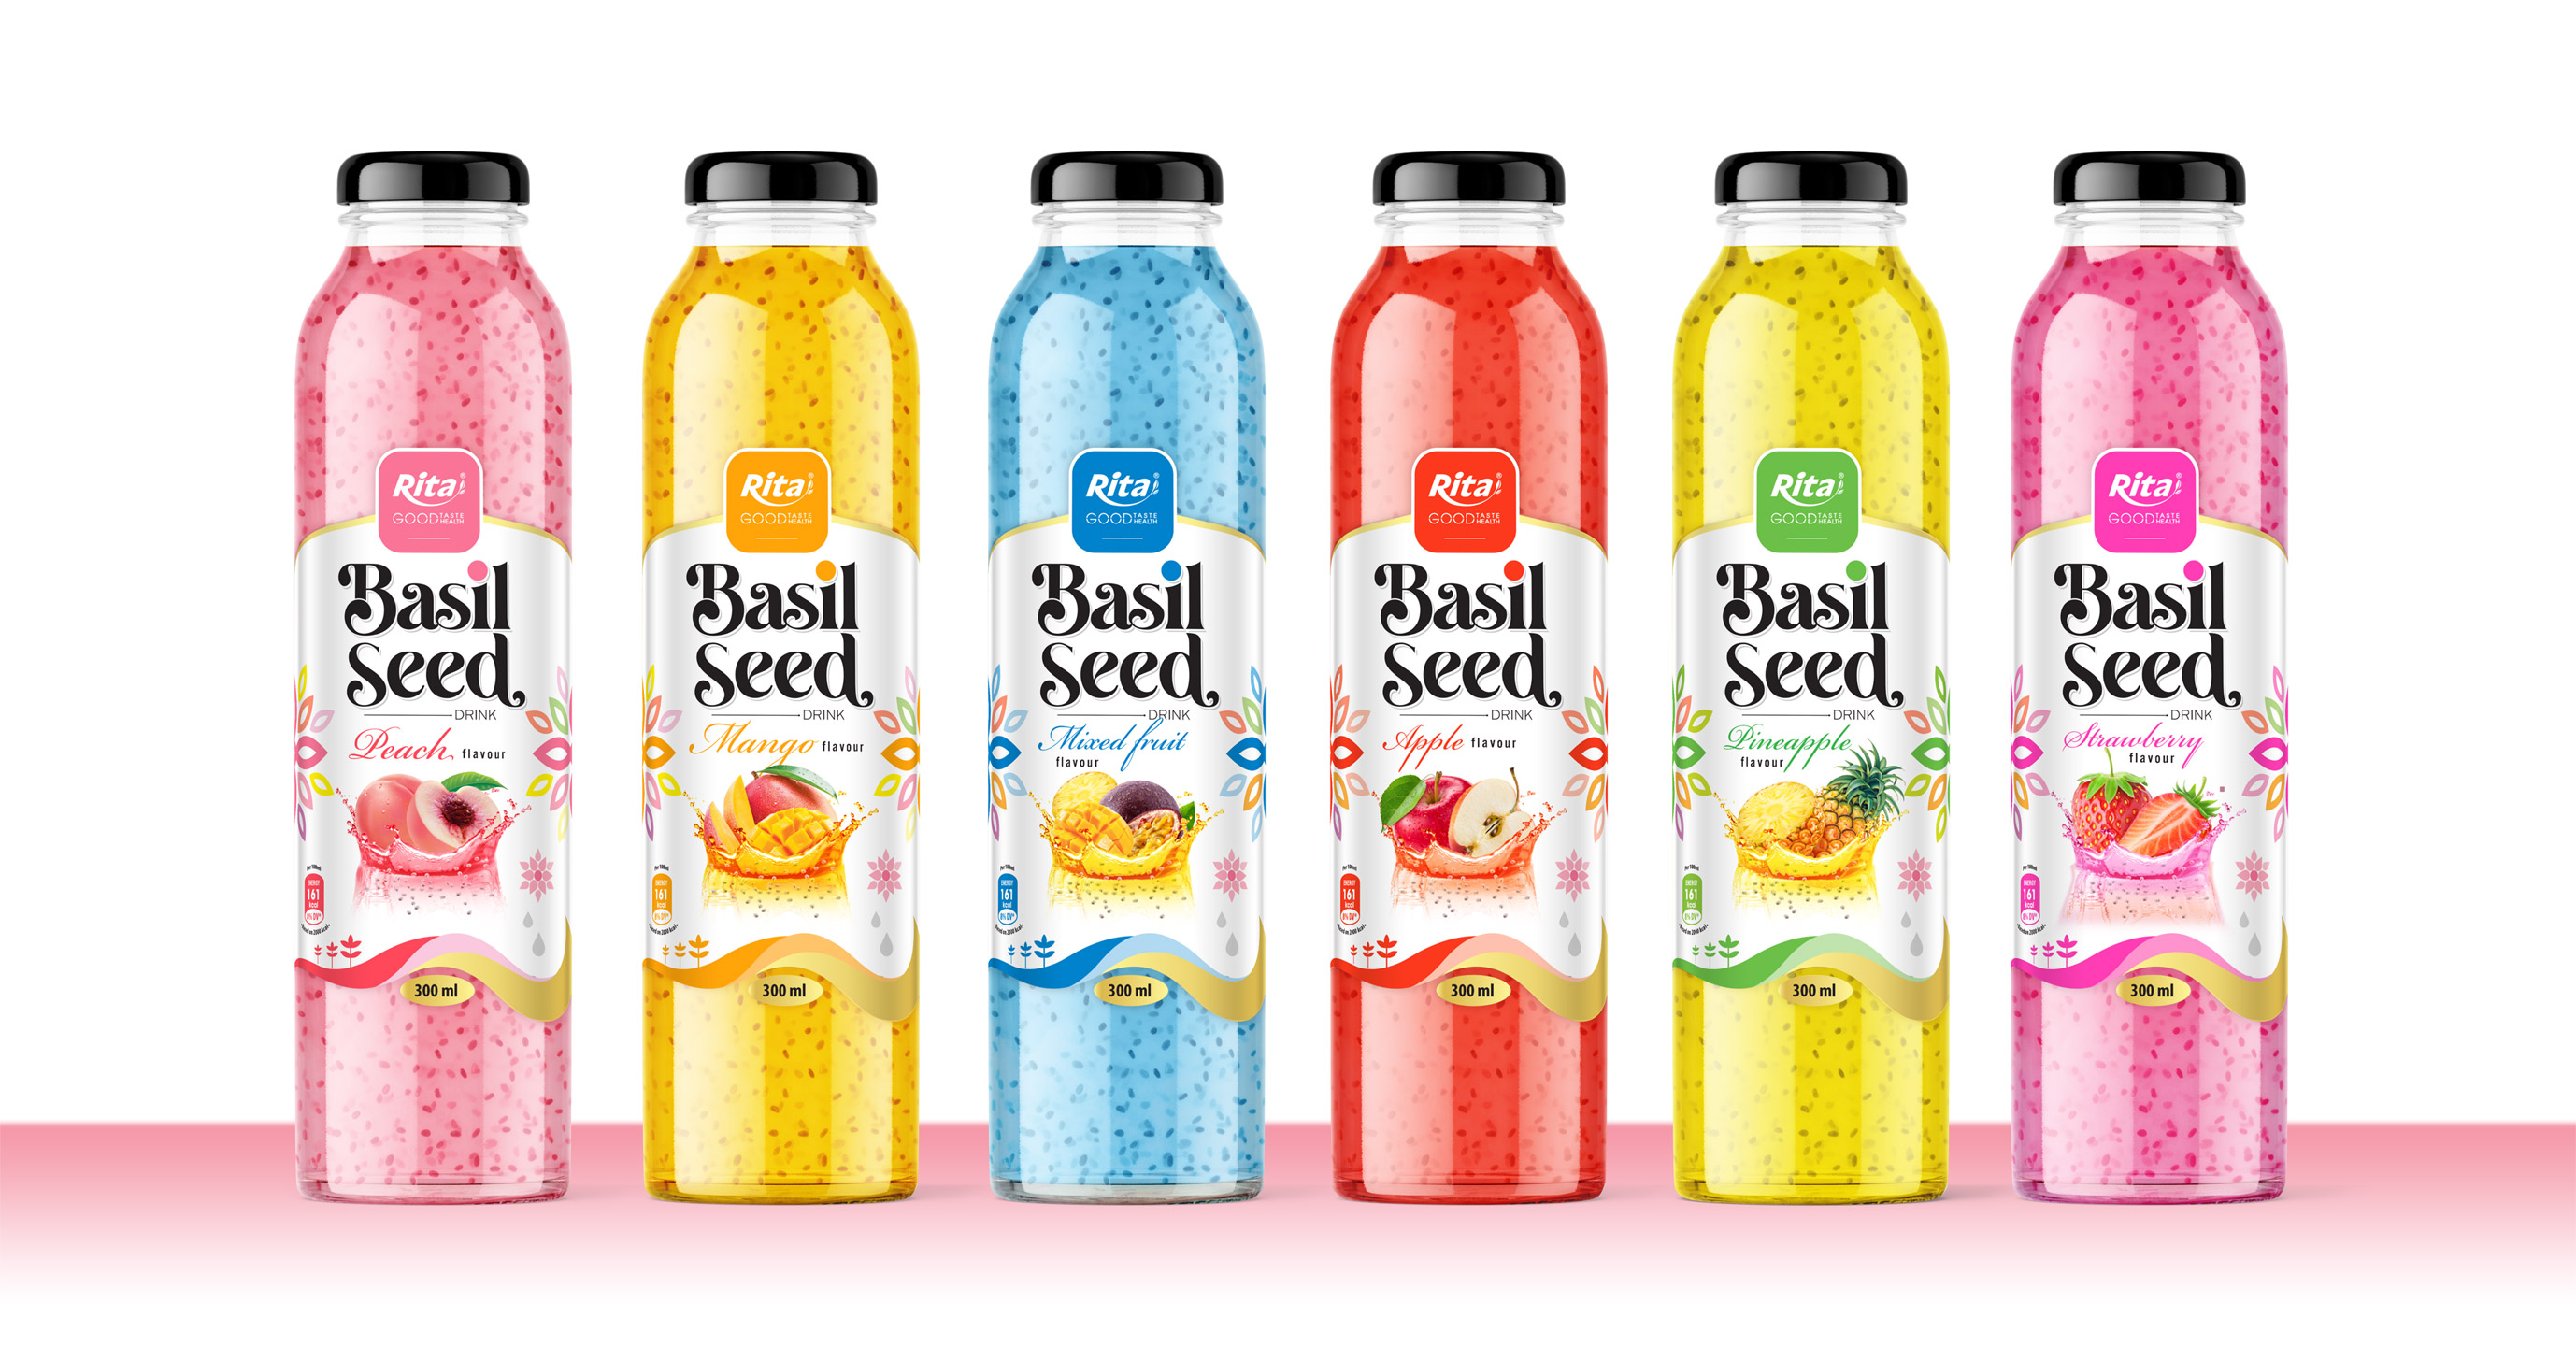 Series Basil seed drink 300ml Glass bottle